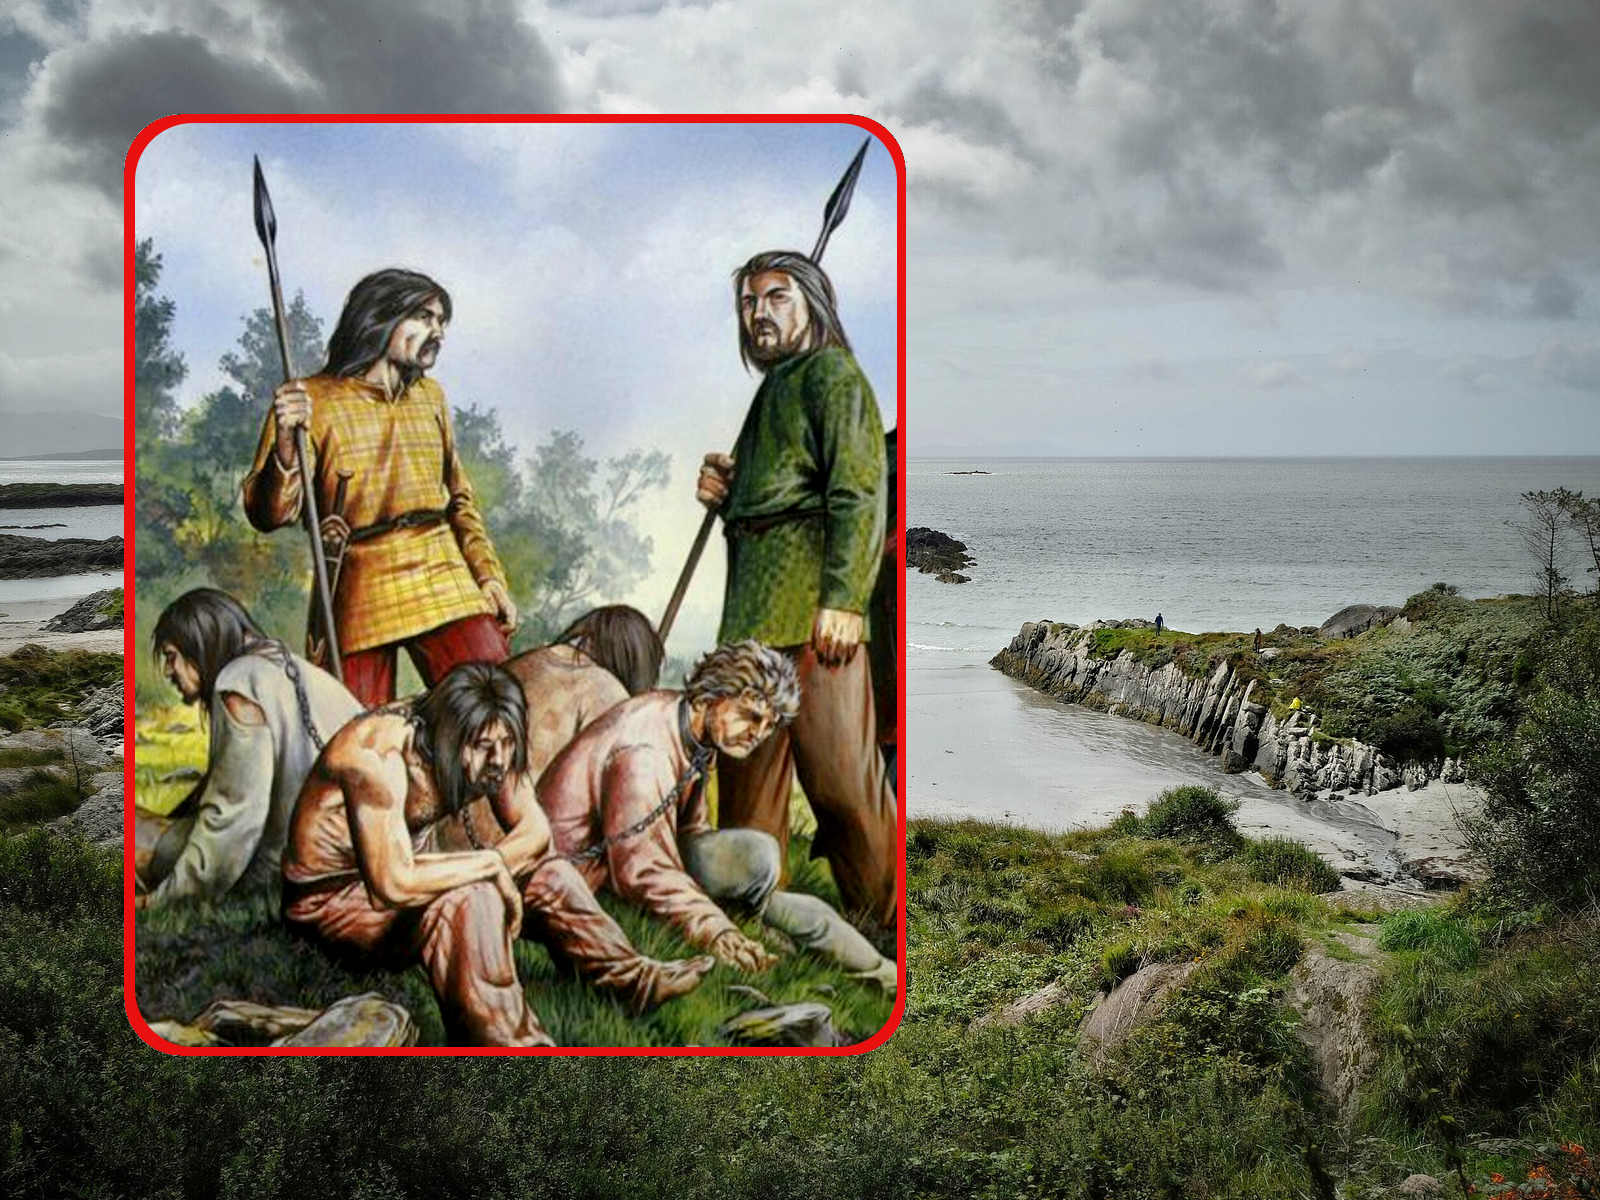 Tuath la tribù celtica